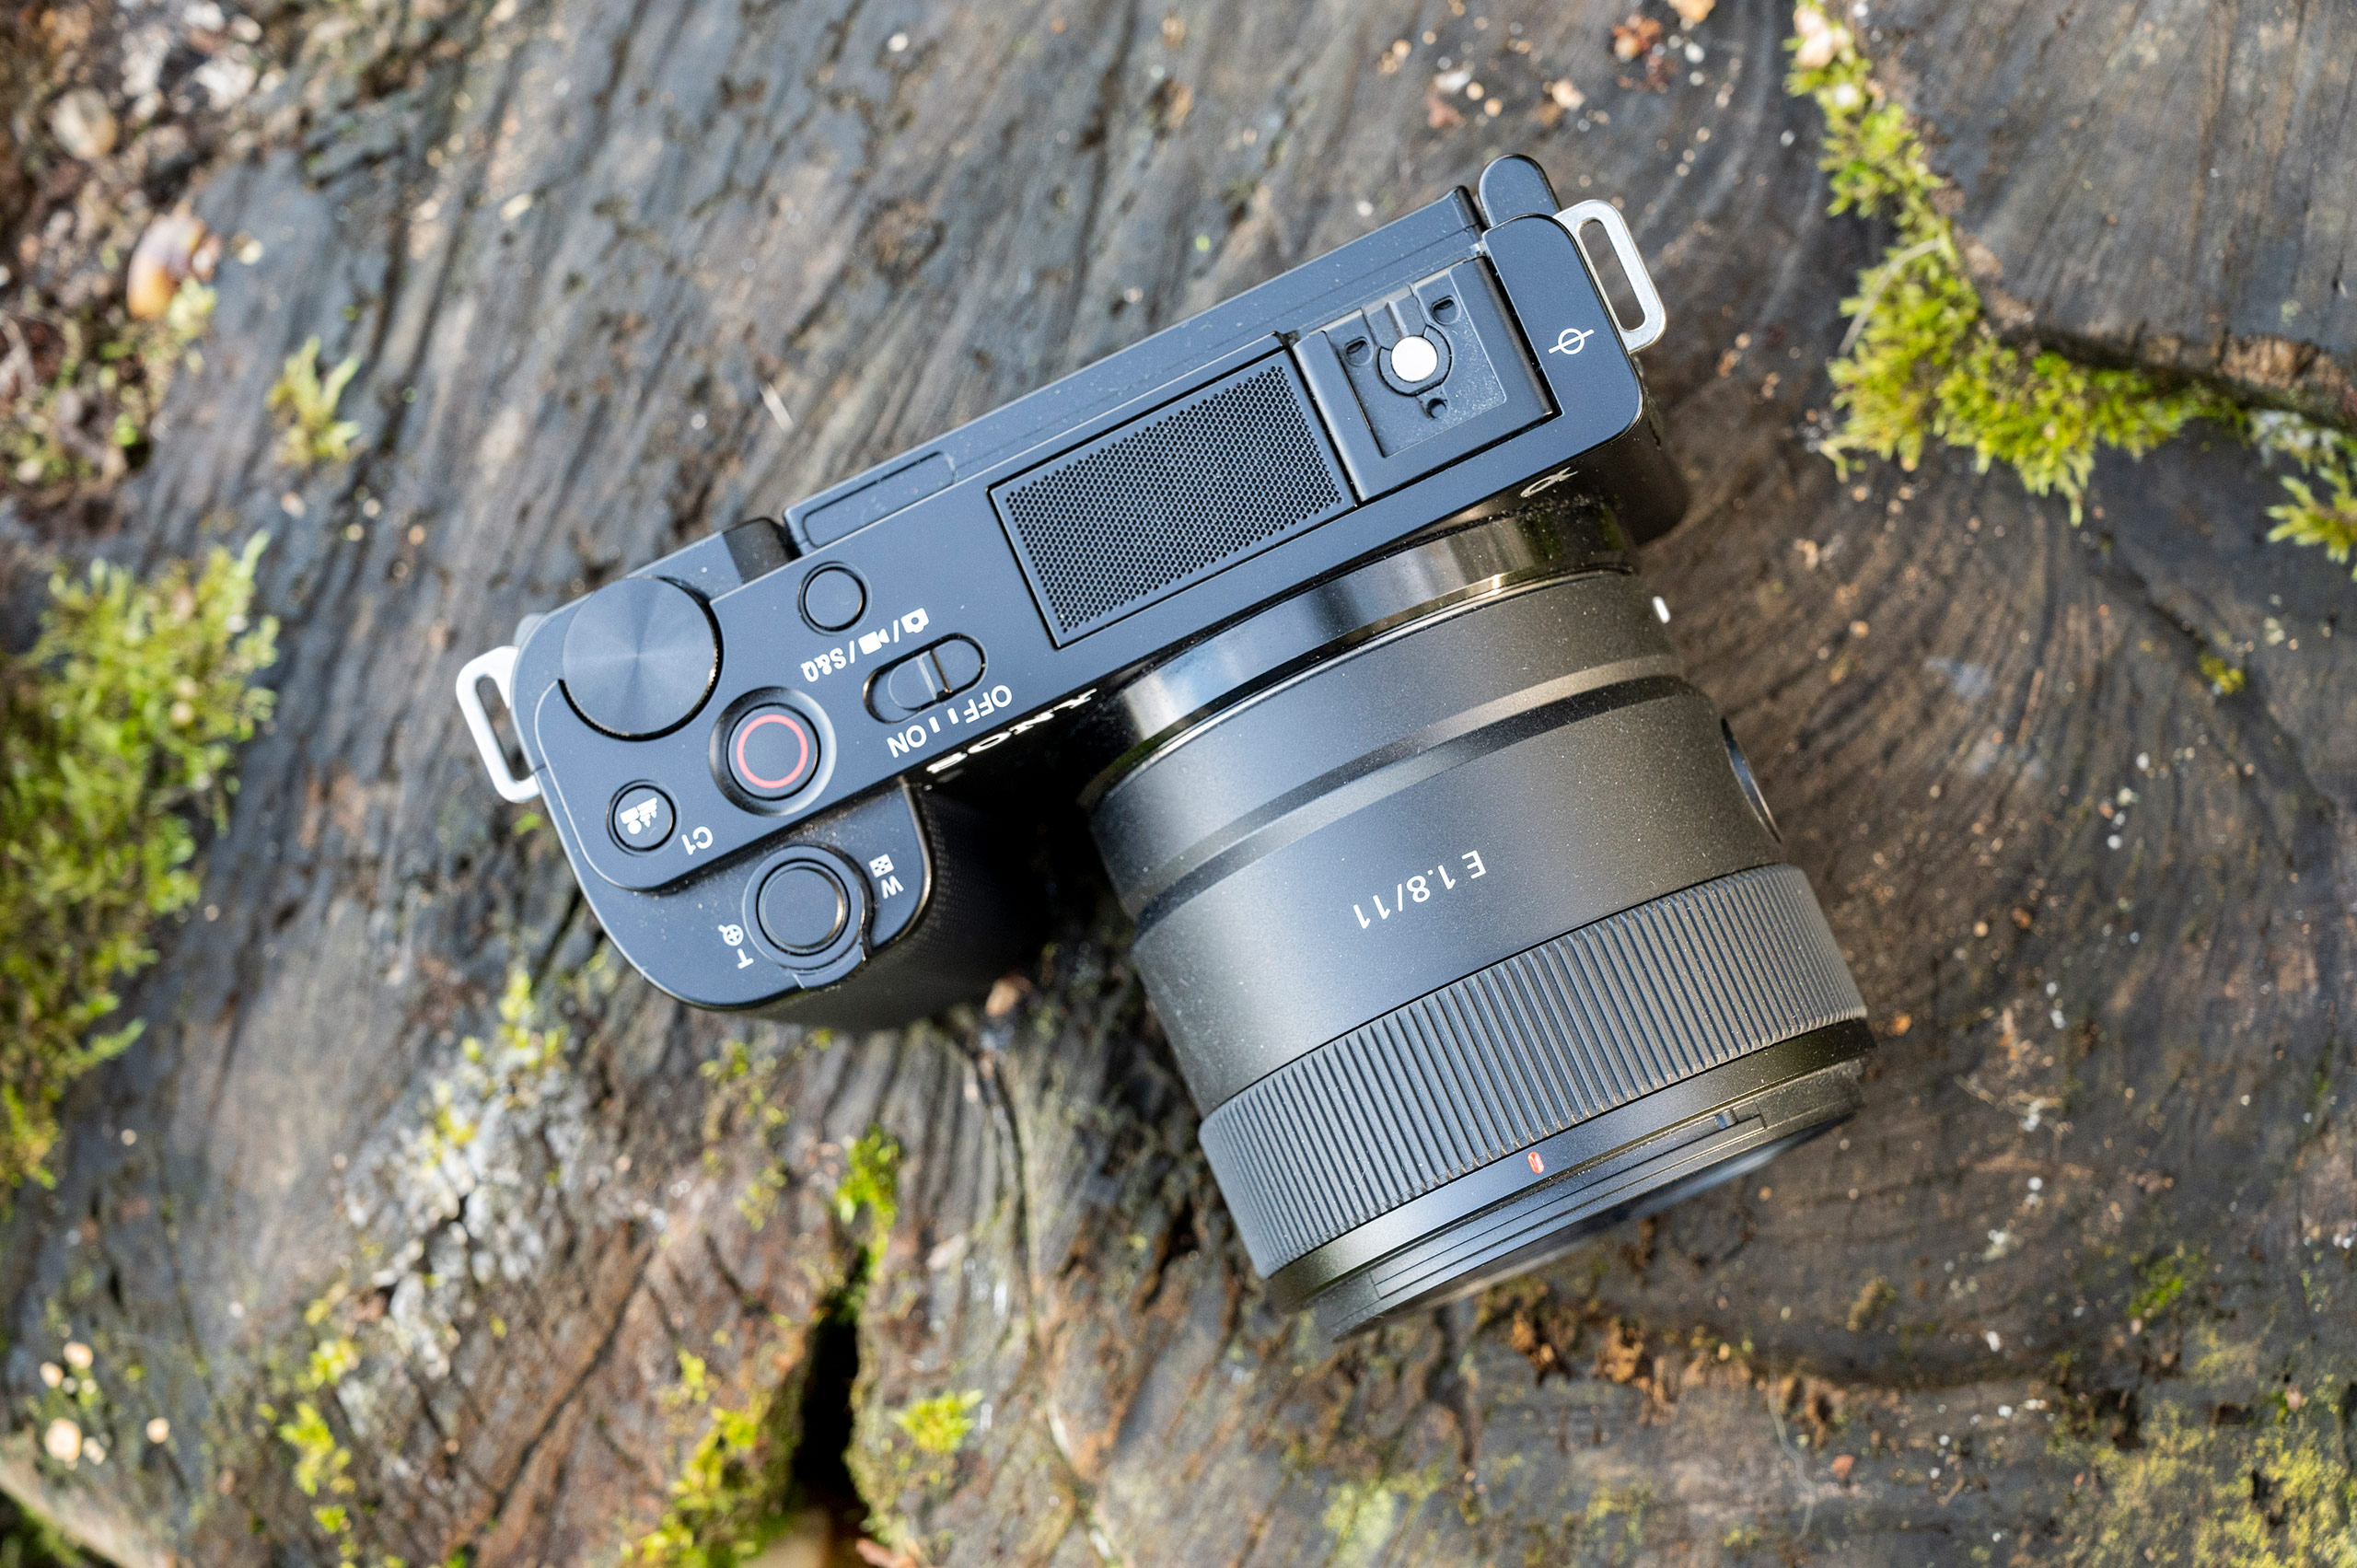 Sony E 11mm F1.8 lens, photo: Amy Davies